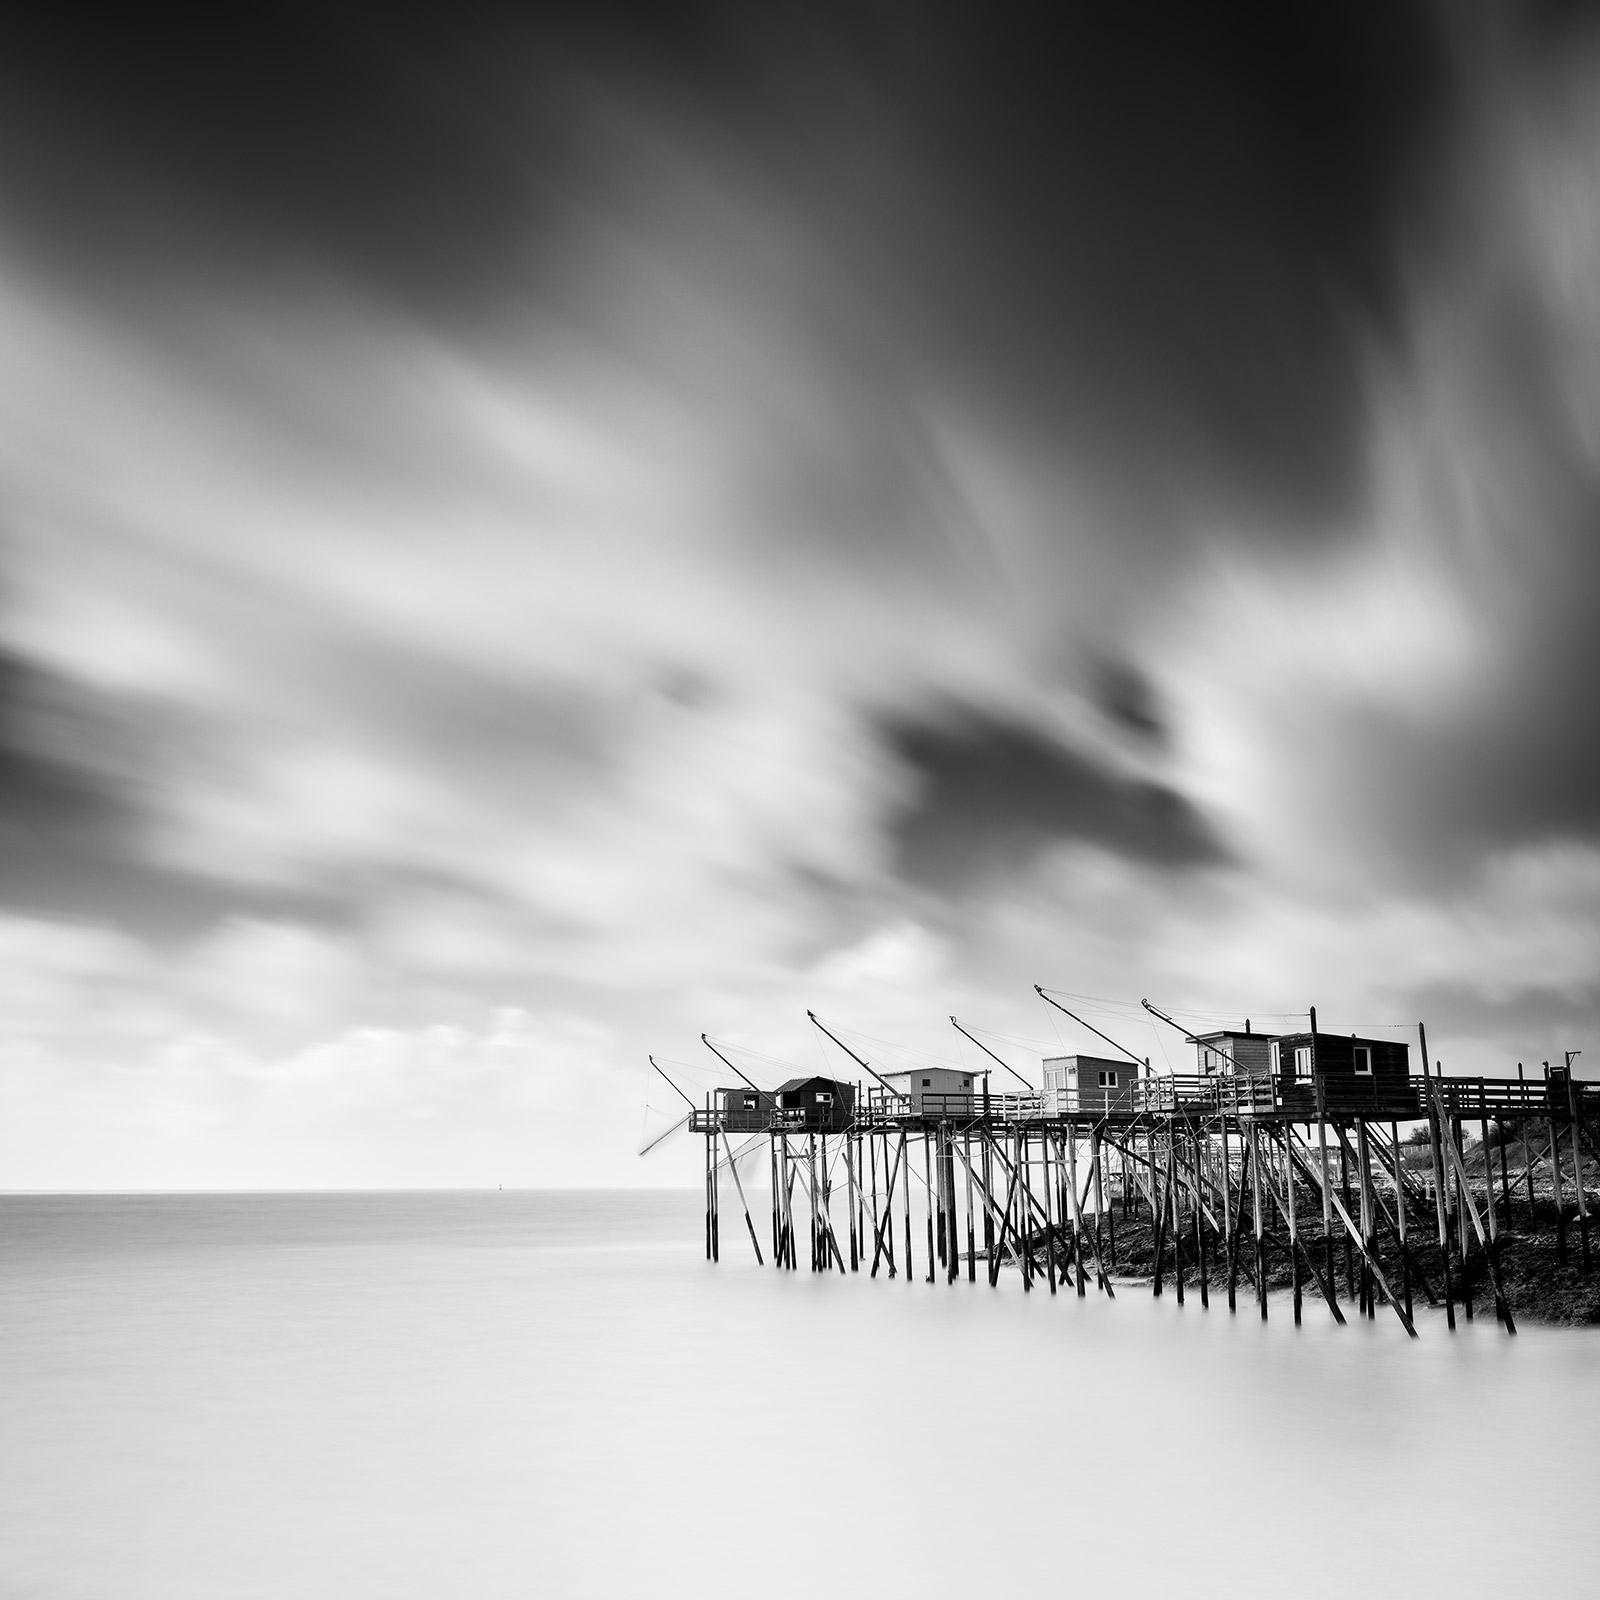 Fishing Hut on Stilts, Carrelet, Atlanic Coast, b&w art landscape photography